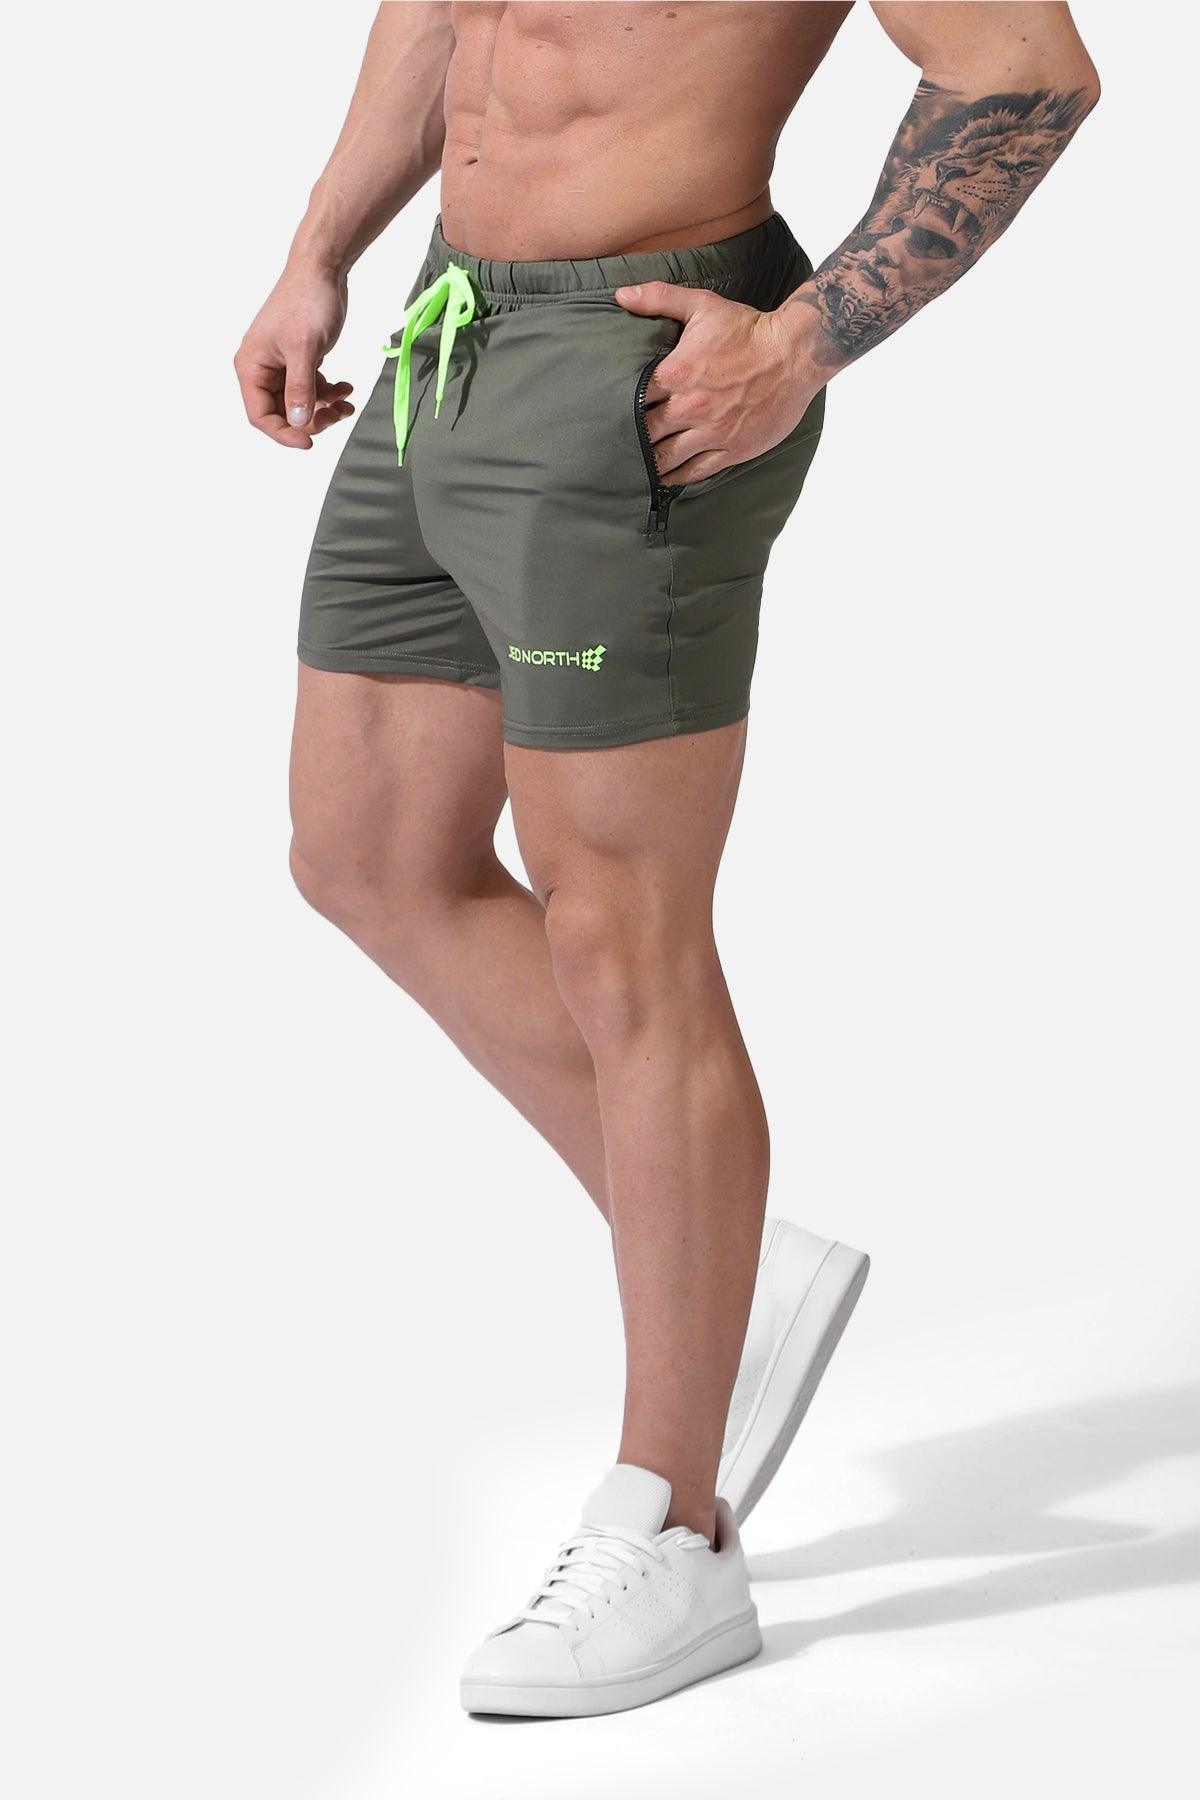 Agile Bodybuilding 4'' Shorts w Zipper Pockets - Olive - Jed North